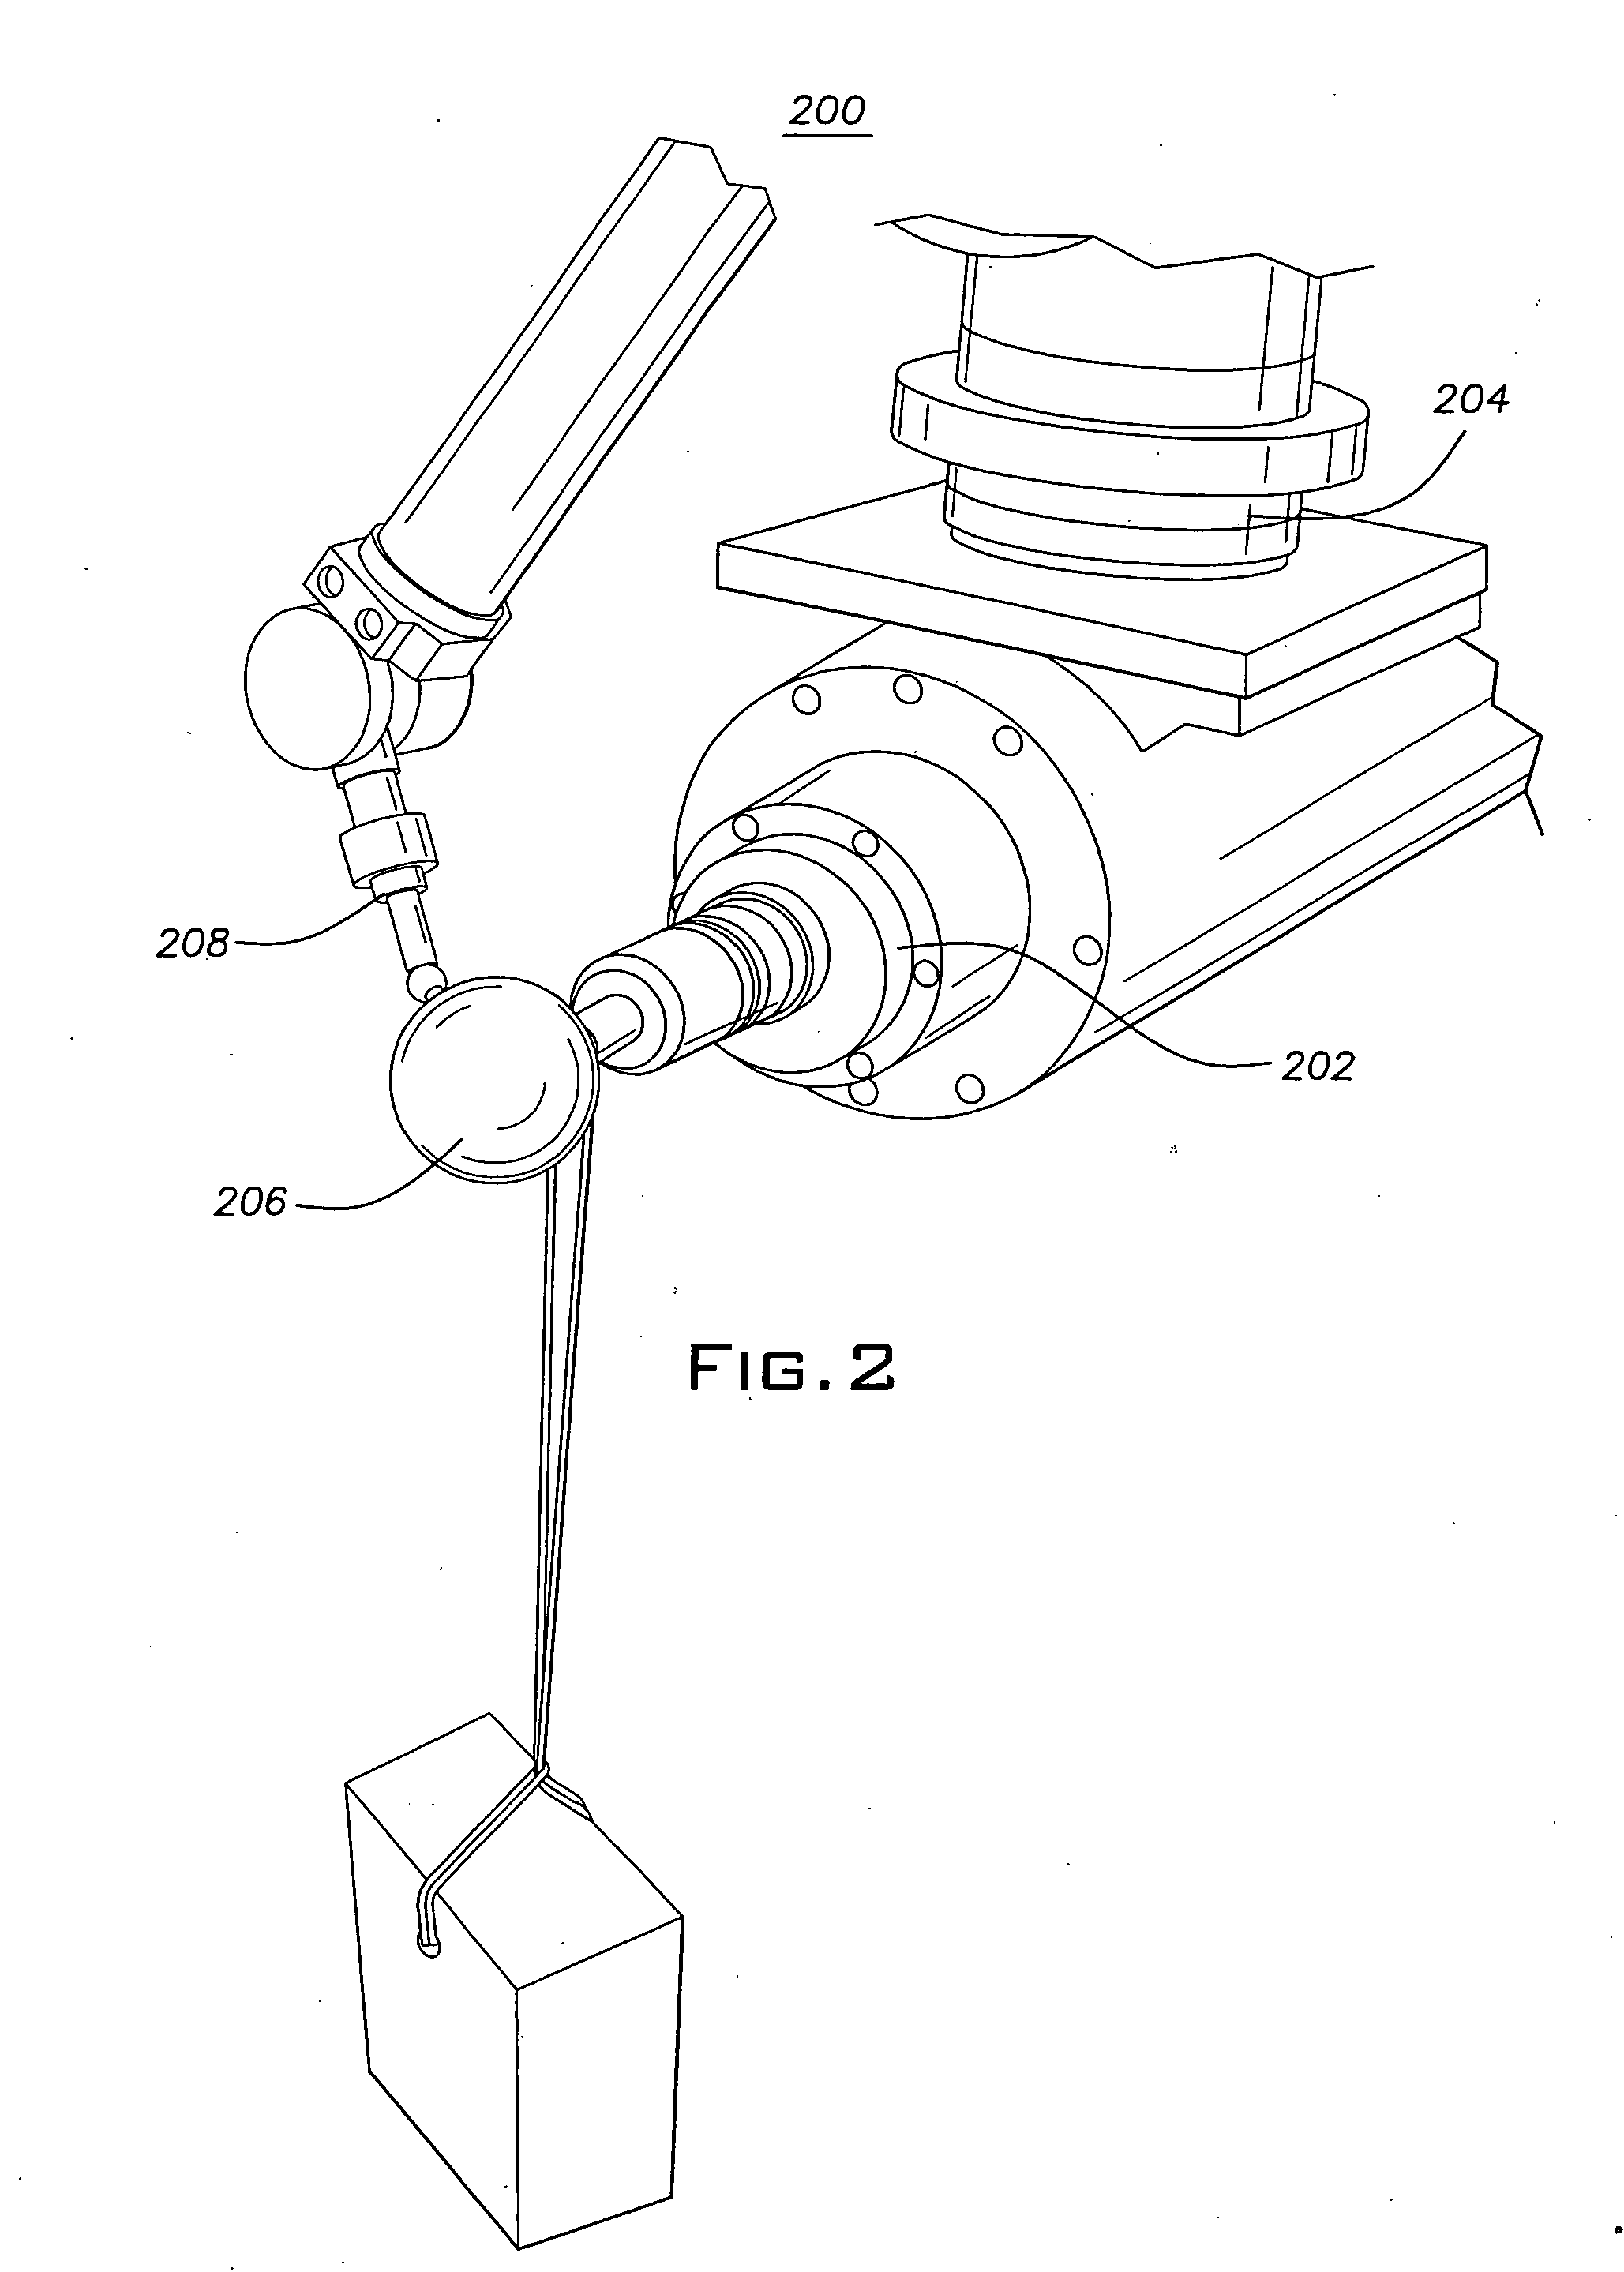 Robotic machining with a flexible manipulator